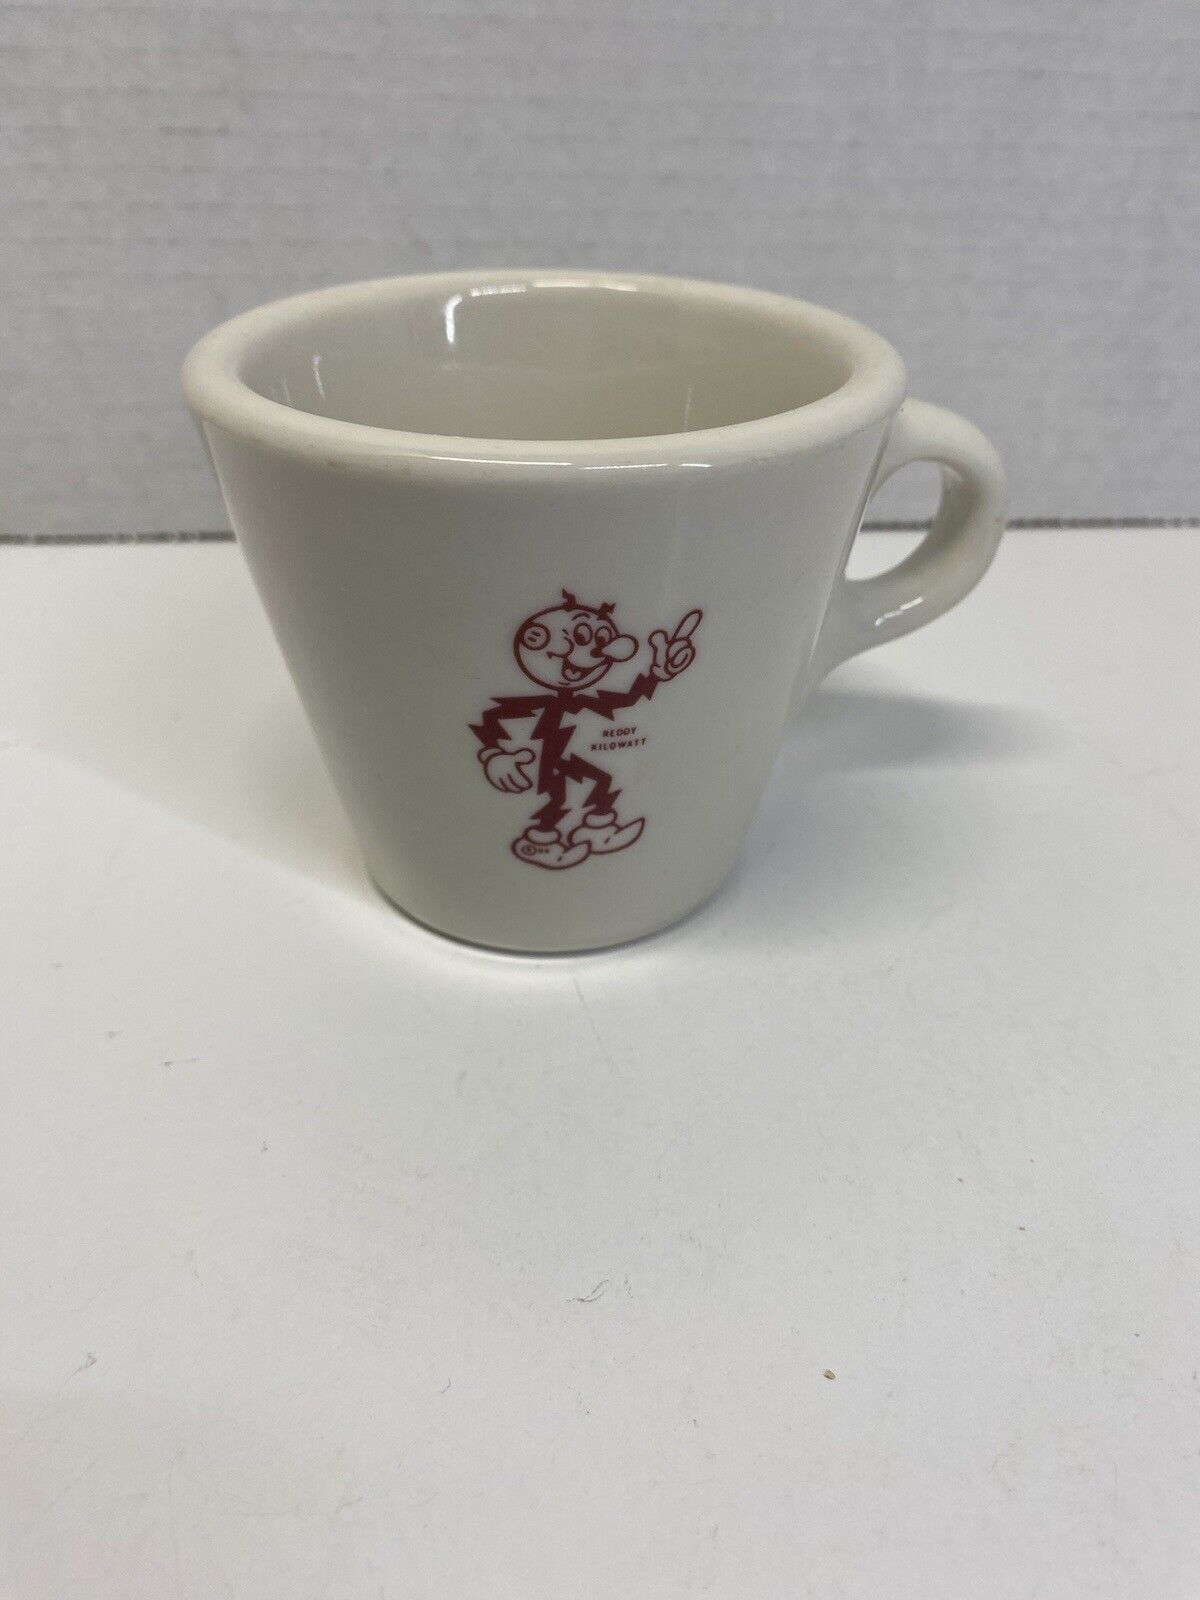 Reddy kilowatt Syracuse China Mug Vintage Coffee Tea Cup Electric Collectibles